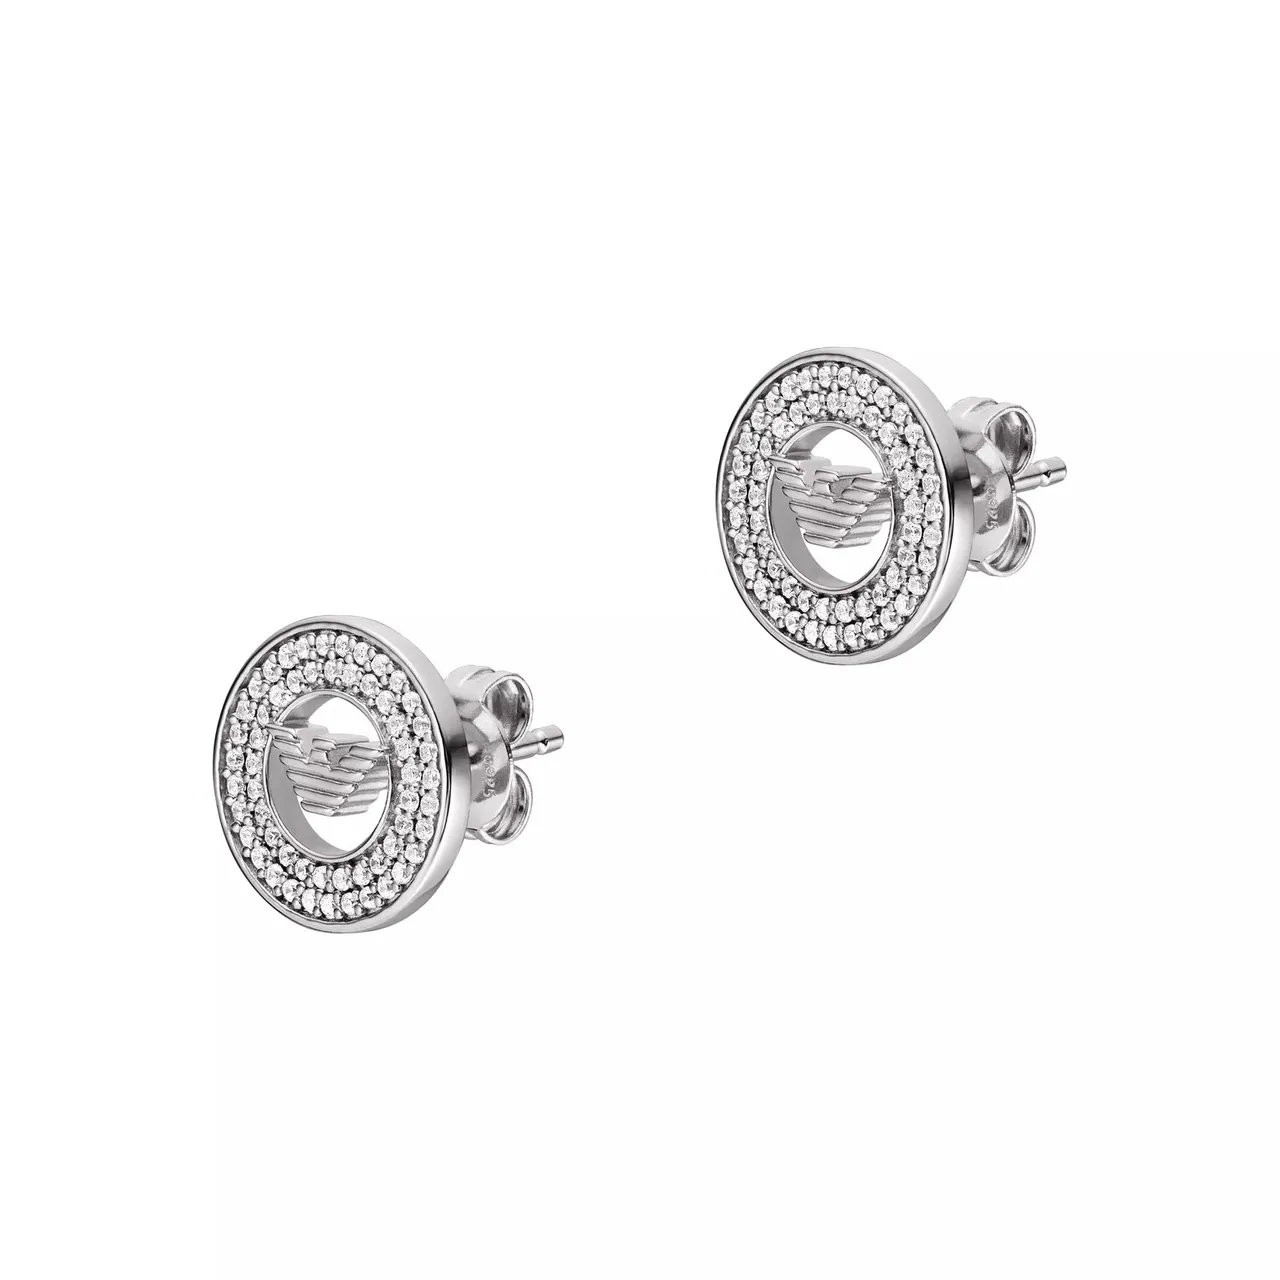 Emporio Armani Earrings - Sterling Silver Stud Earrings - silver - Earrings for ladies